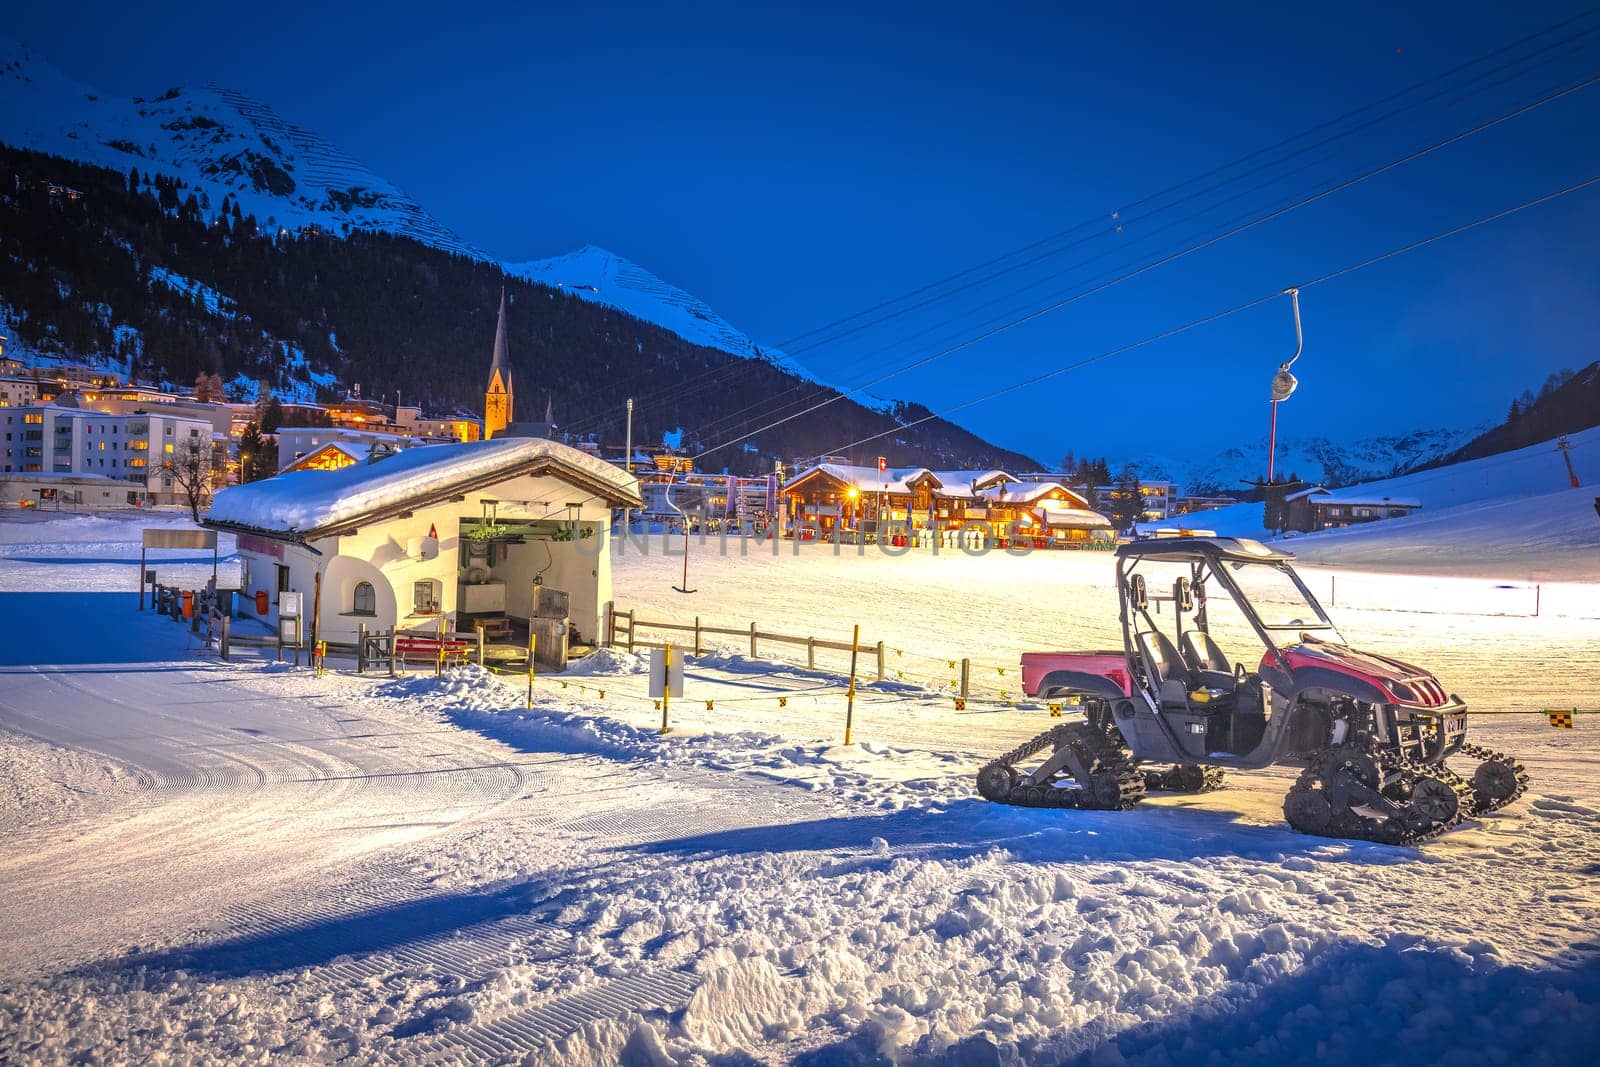 Idyllic mountain town of Davos in Swiss Alps ski slope evening view, Graubunden region of Switzerland